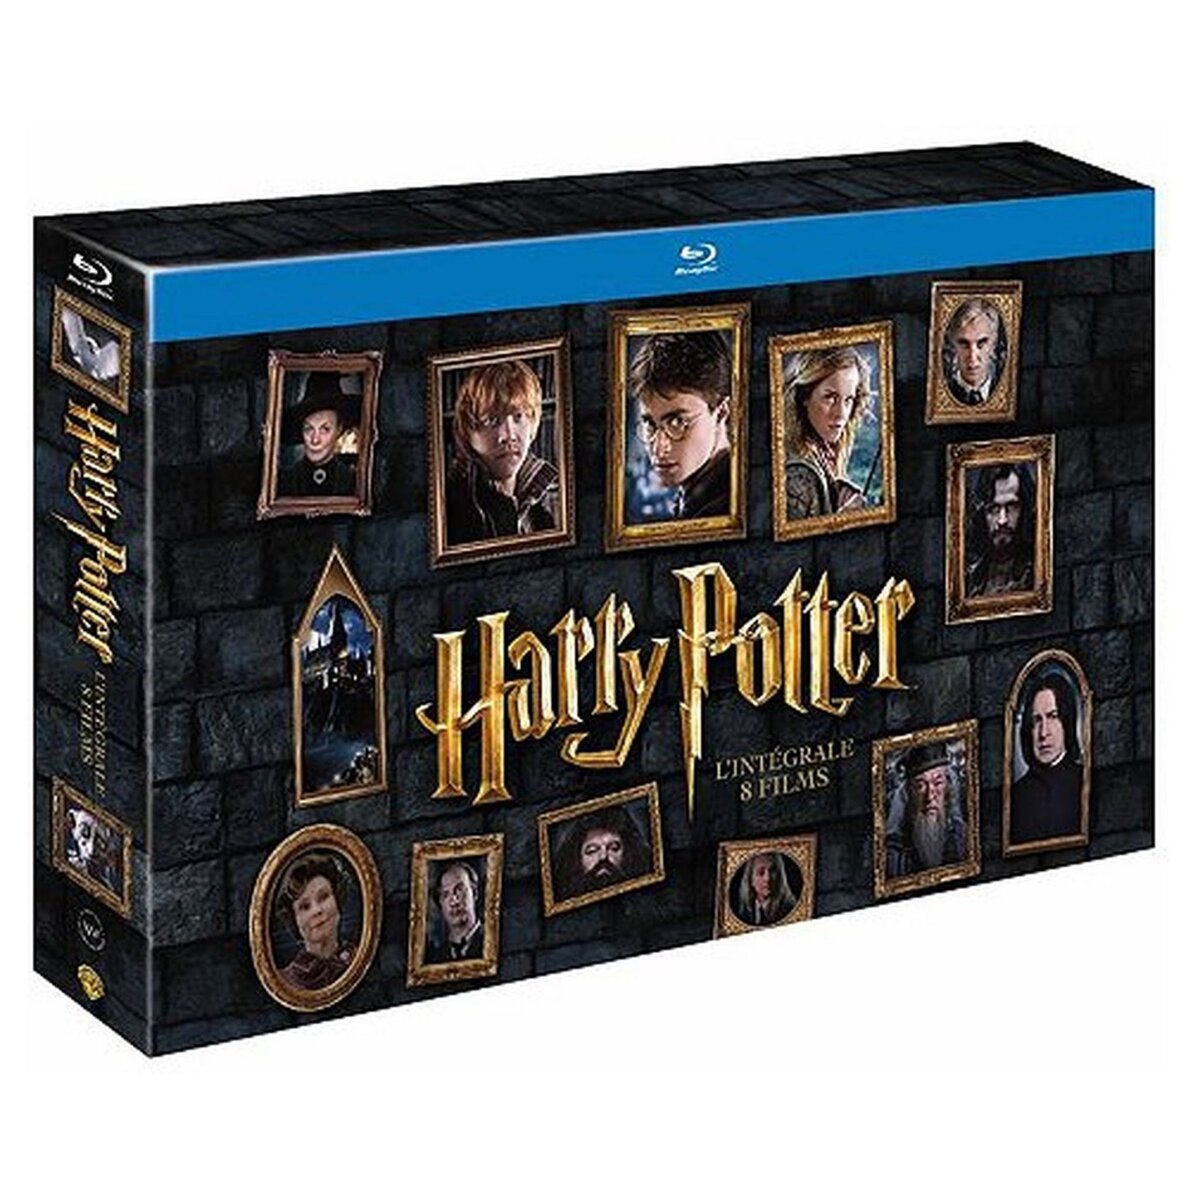 Harry Potter - L'intégrale 8 films BR